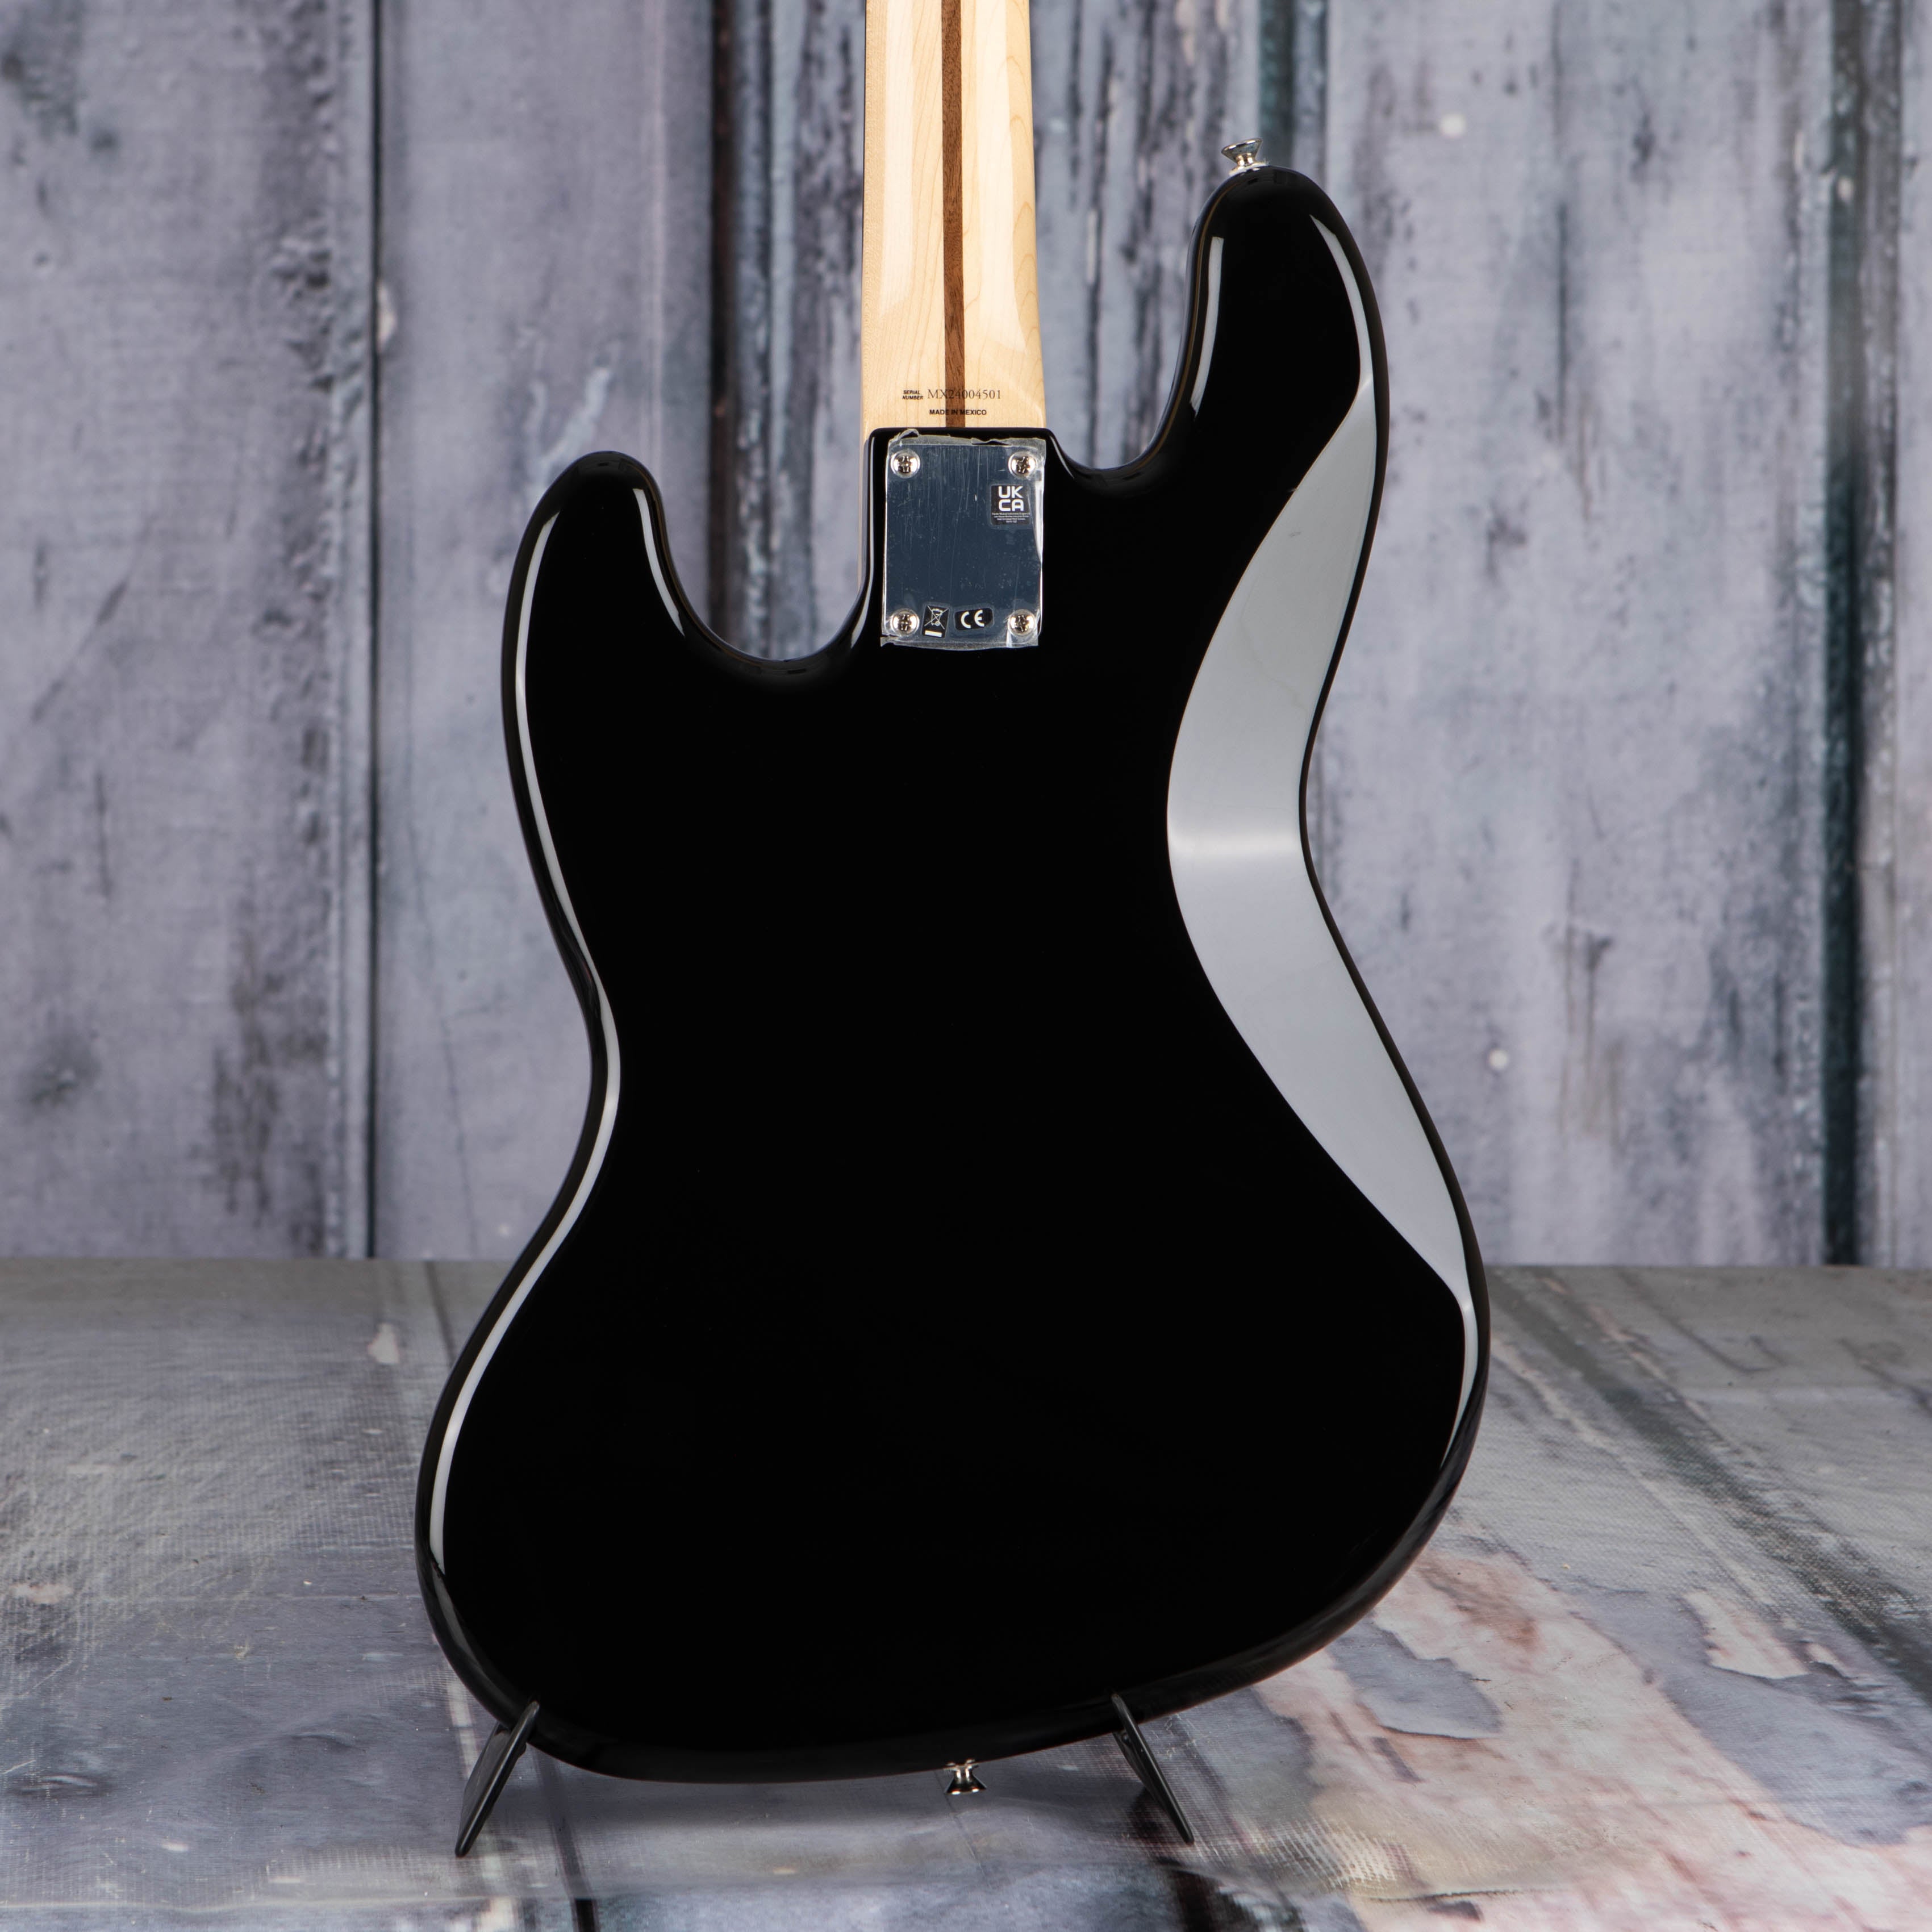 Fender Geddy Lee Jazz Bass Guitar, Black, back closeup